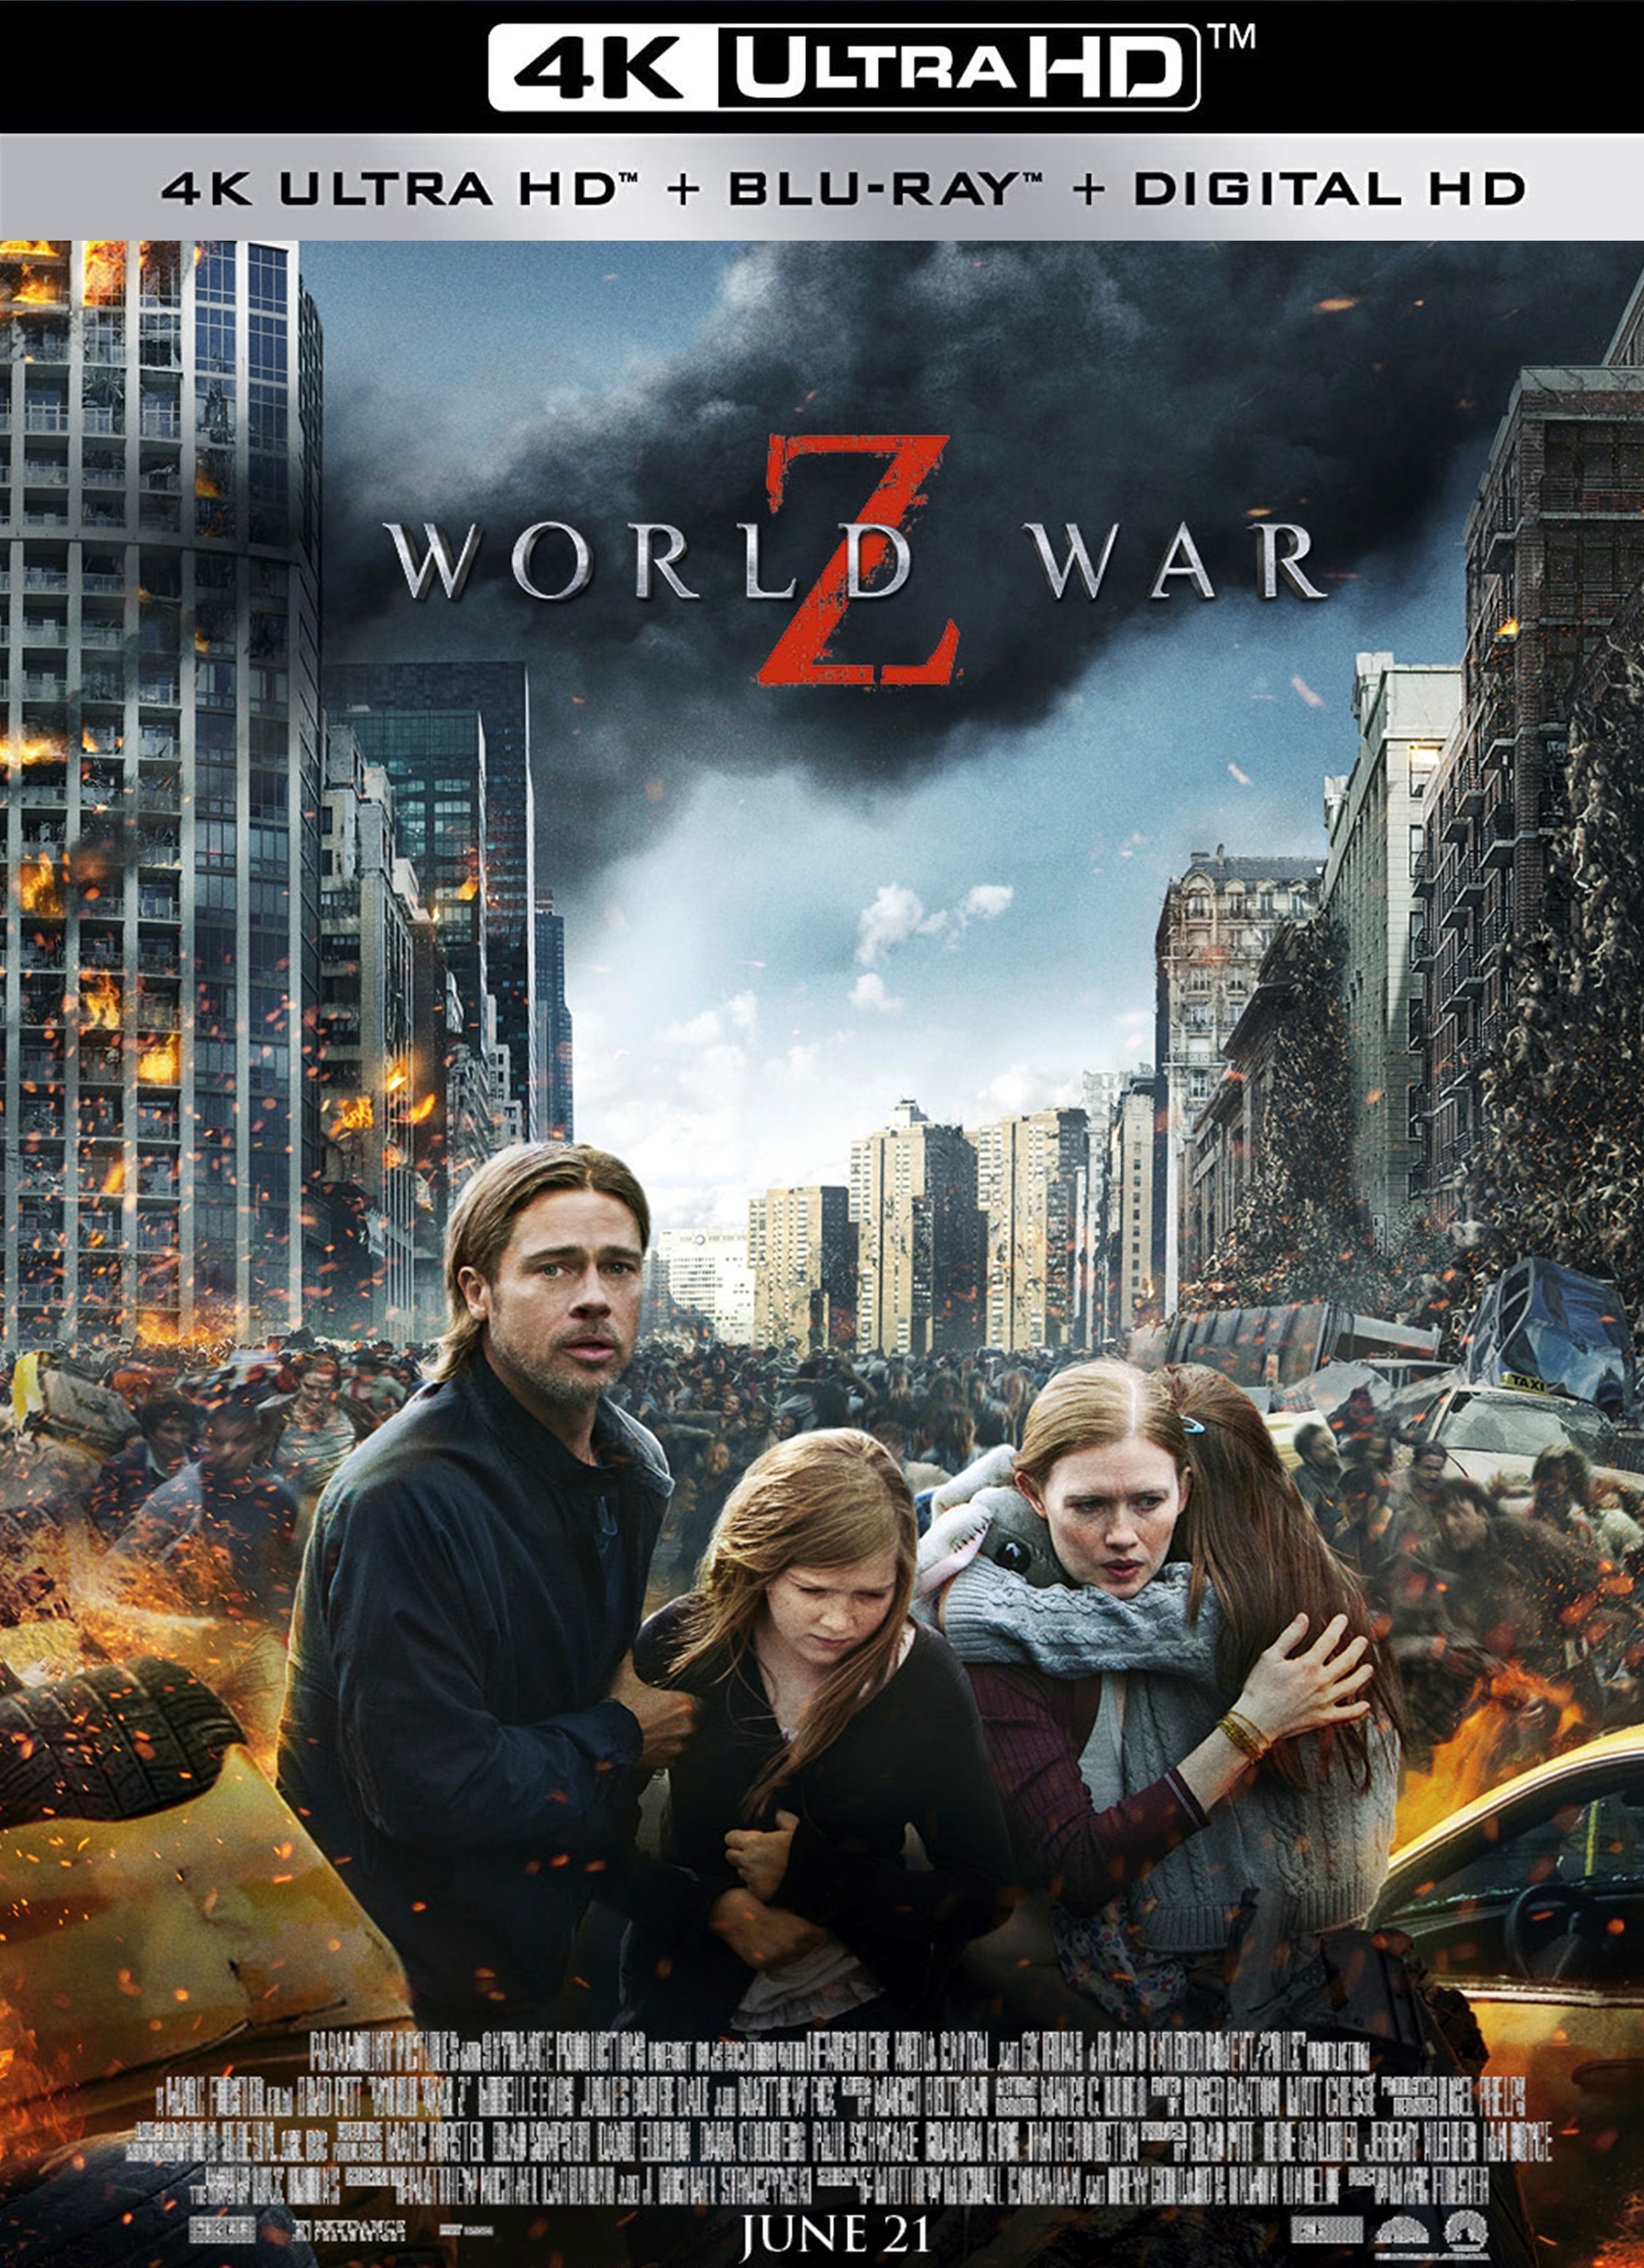 Stiahni si UHD Filmy Svetova valka Z / World War Z (2013)(CZ/EN)(2160p 4K WebRip) = CSFD 75%